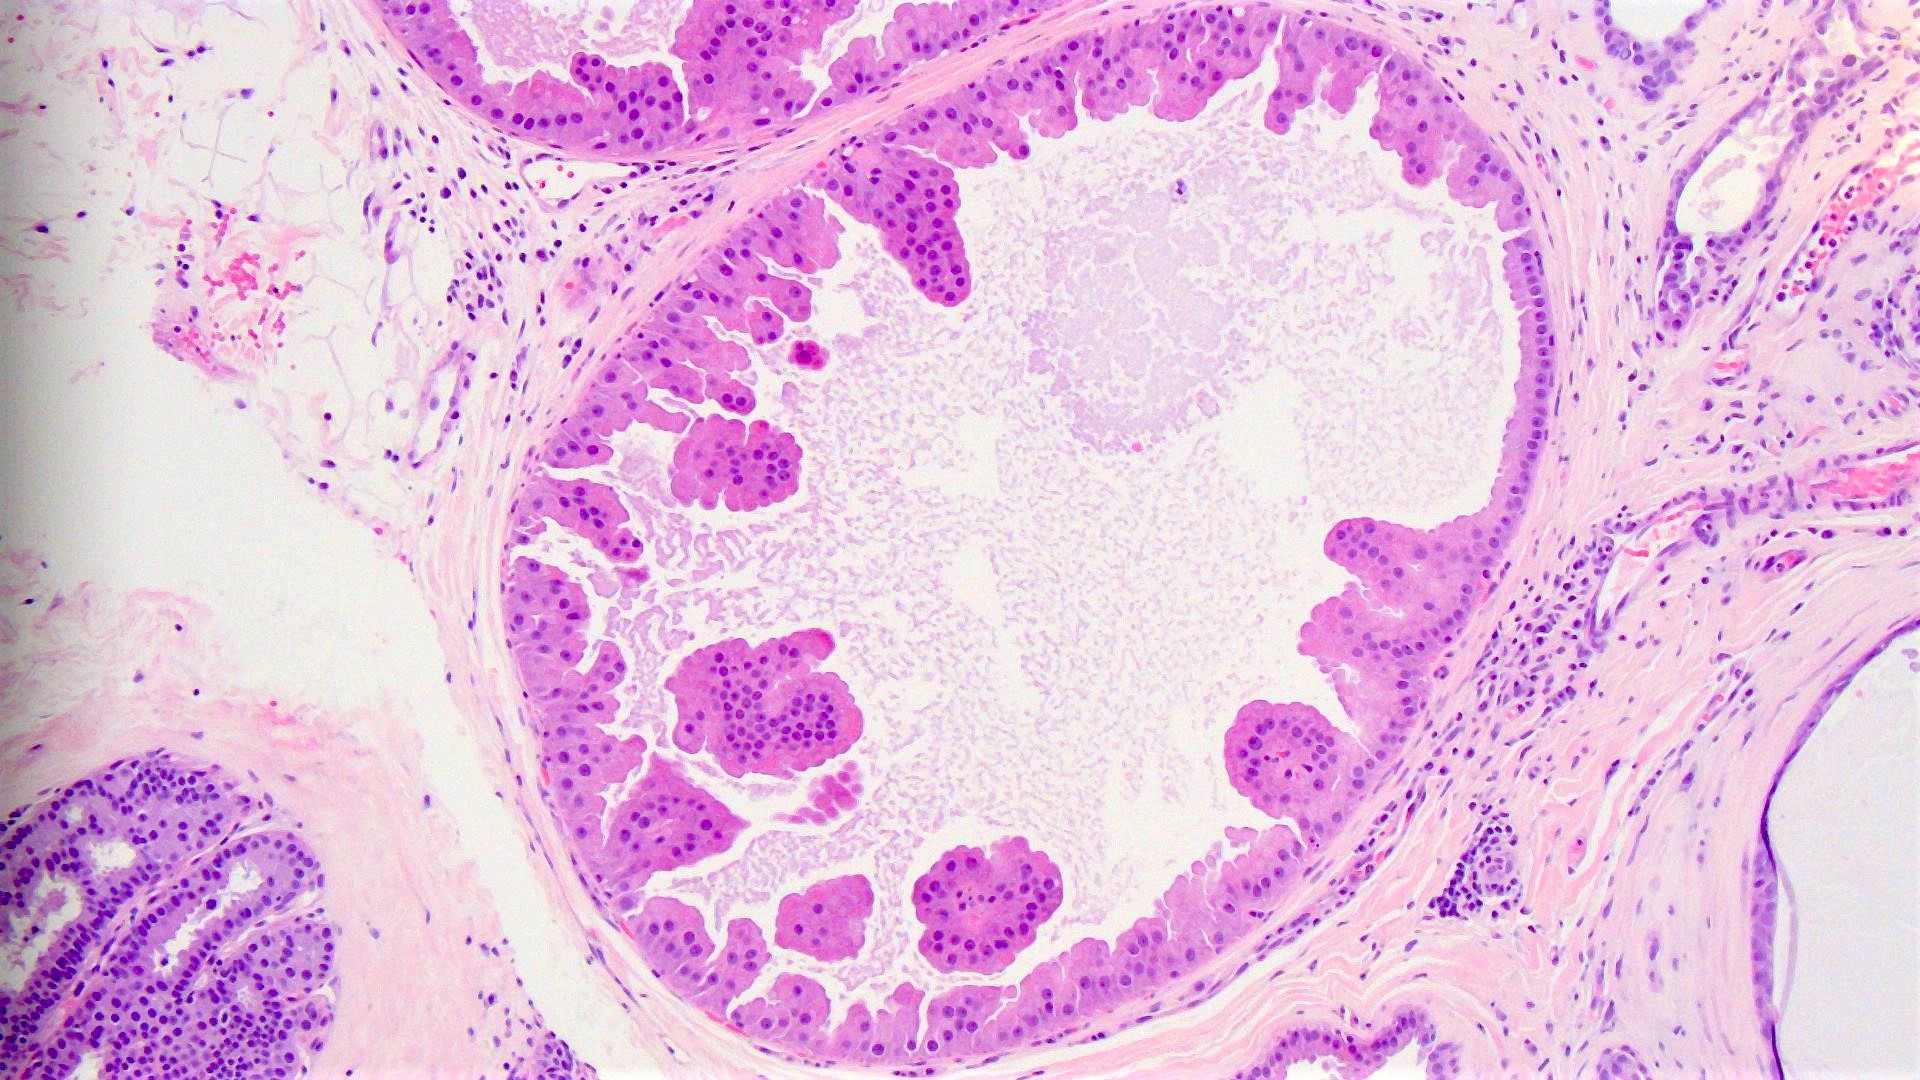 Intraductal papilloma apocrine metaplasia